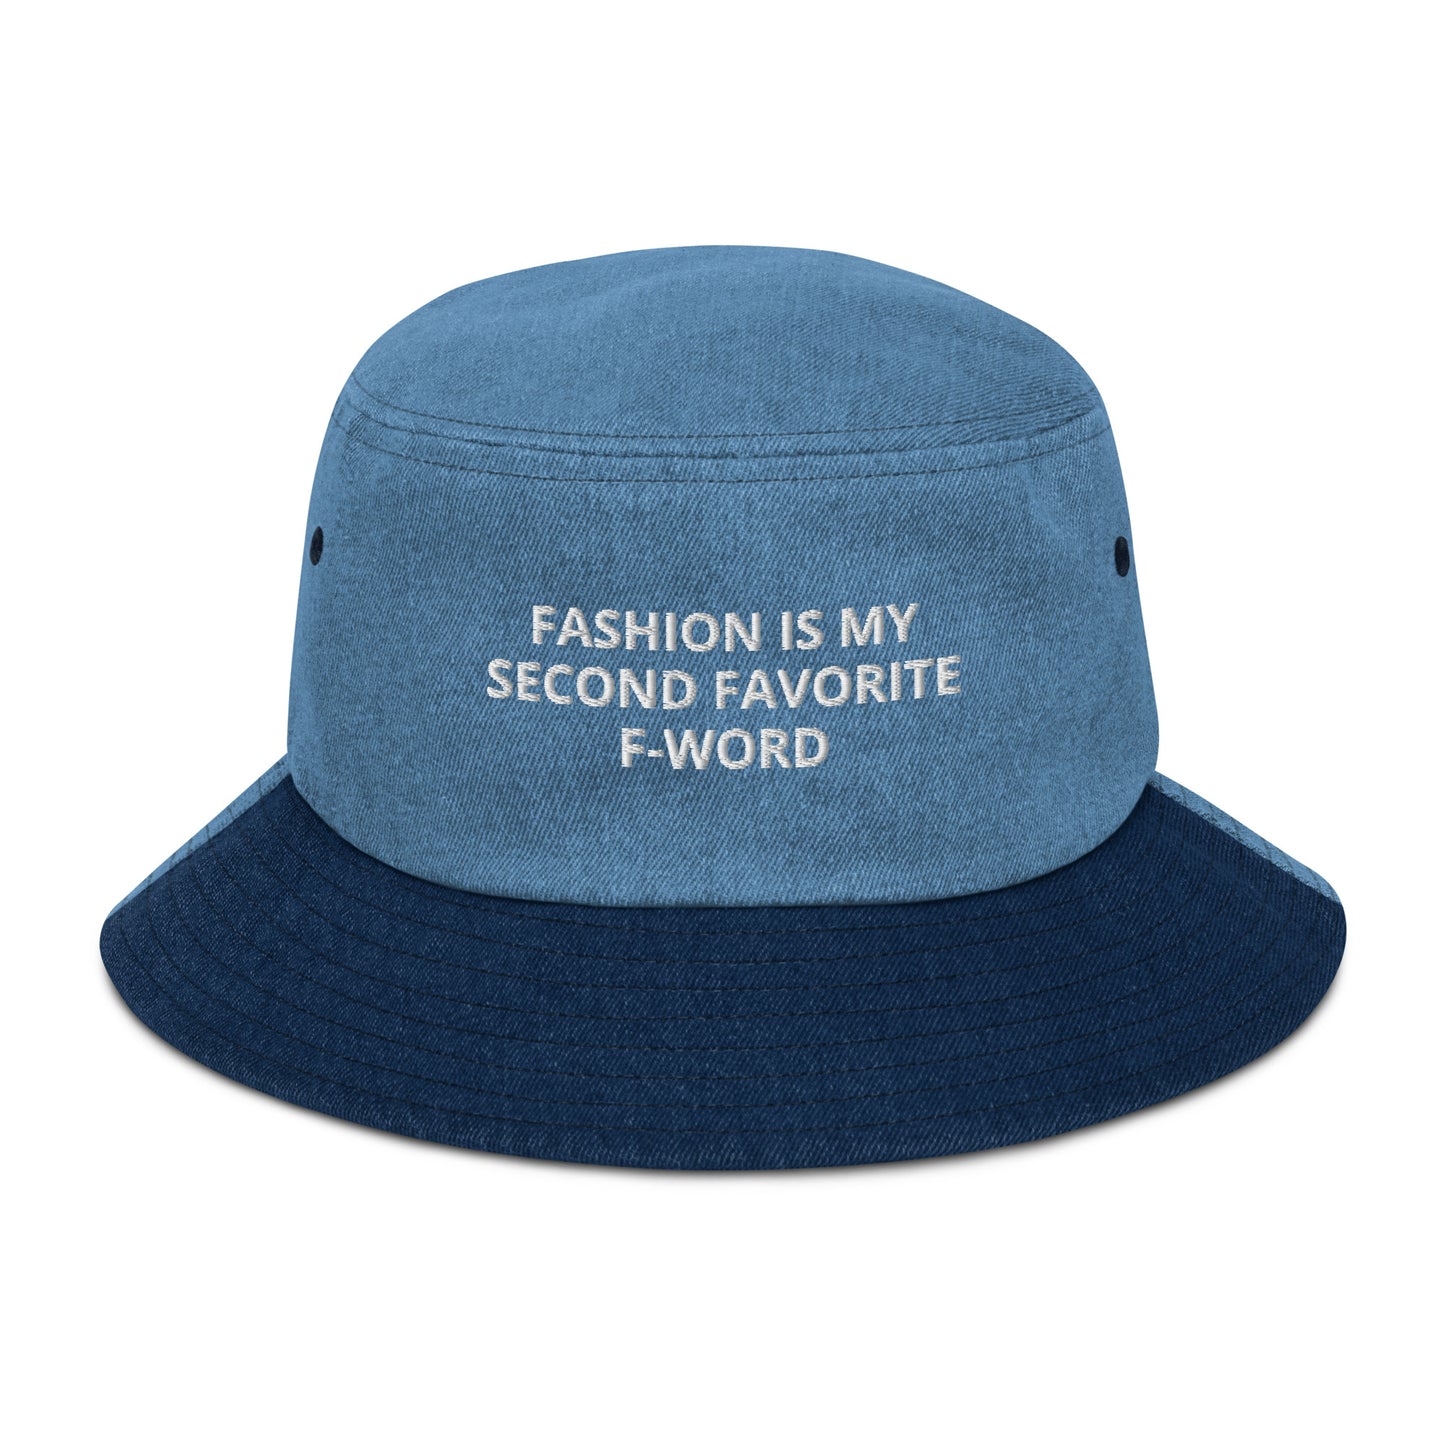 F-word bucket hat